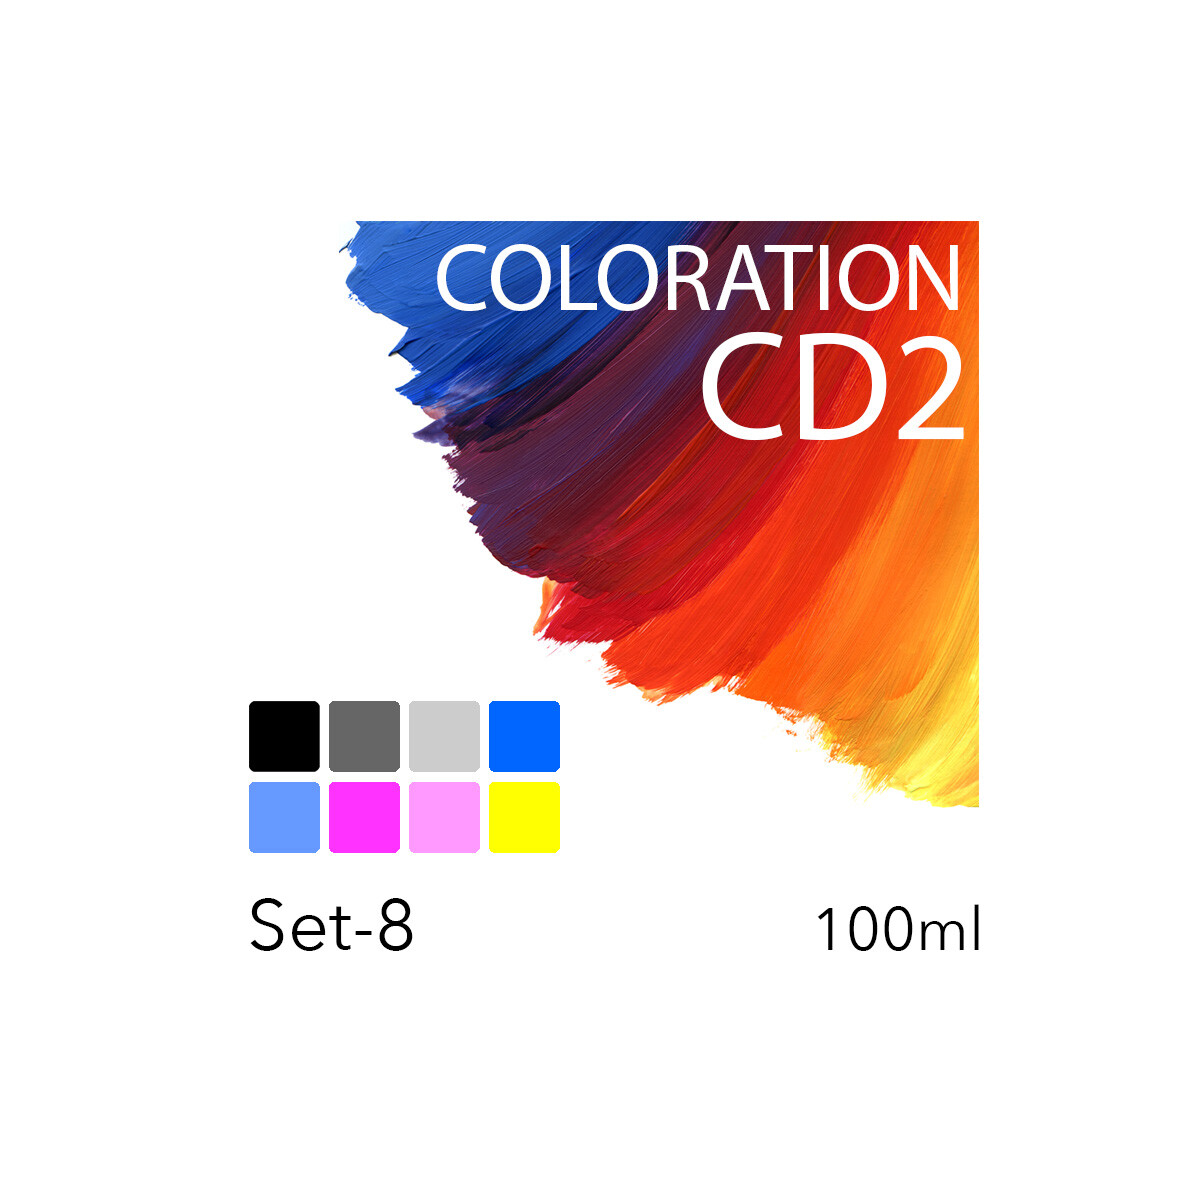 Coloration CD2 8-Flaschen-Set 100ml